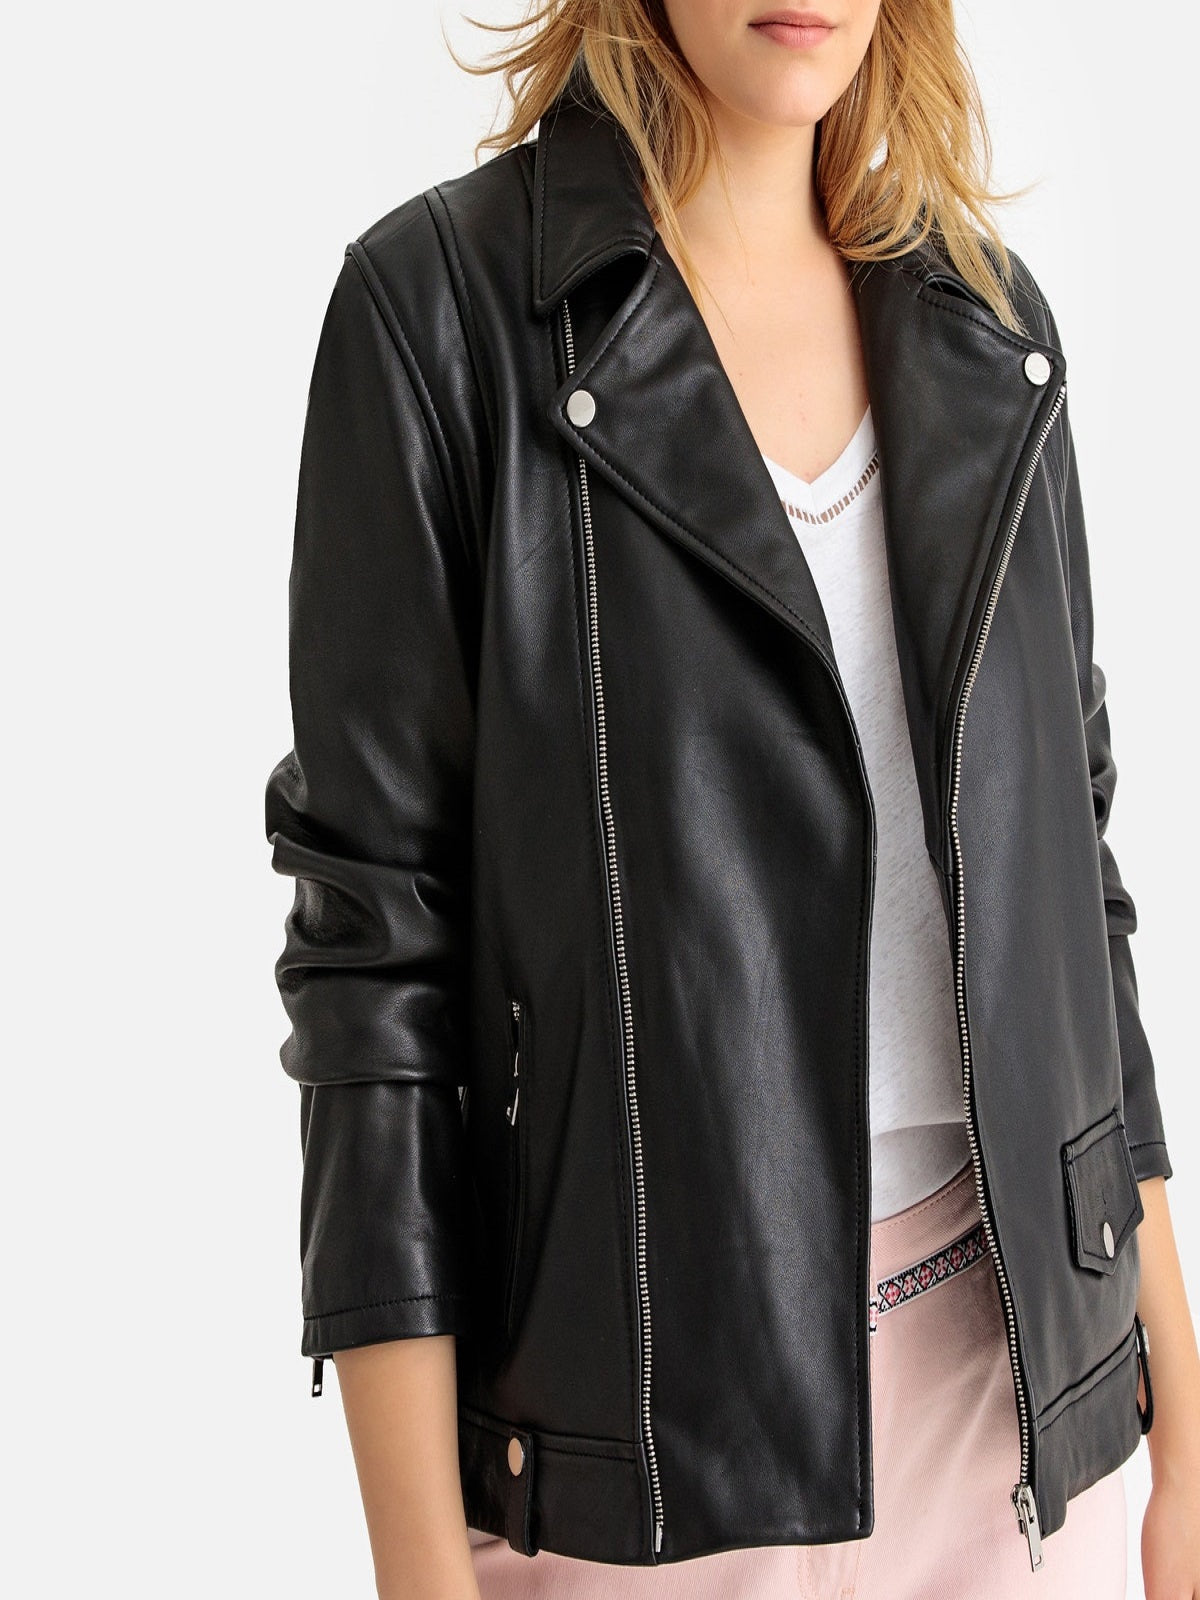 Asymmetrical Black Leather Jacket For Women - LJ